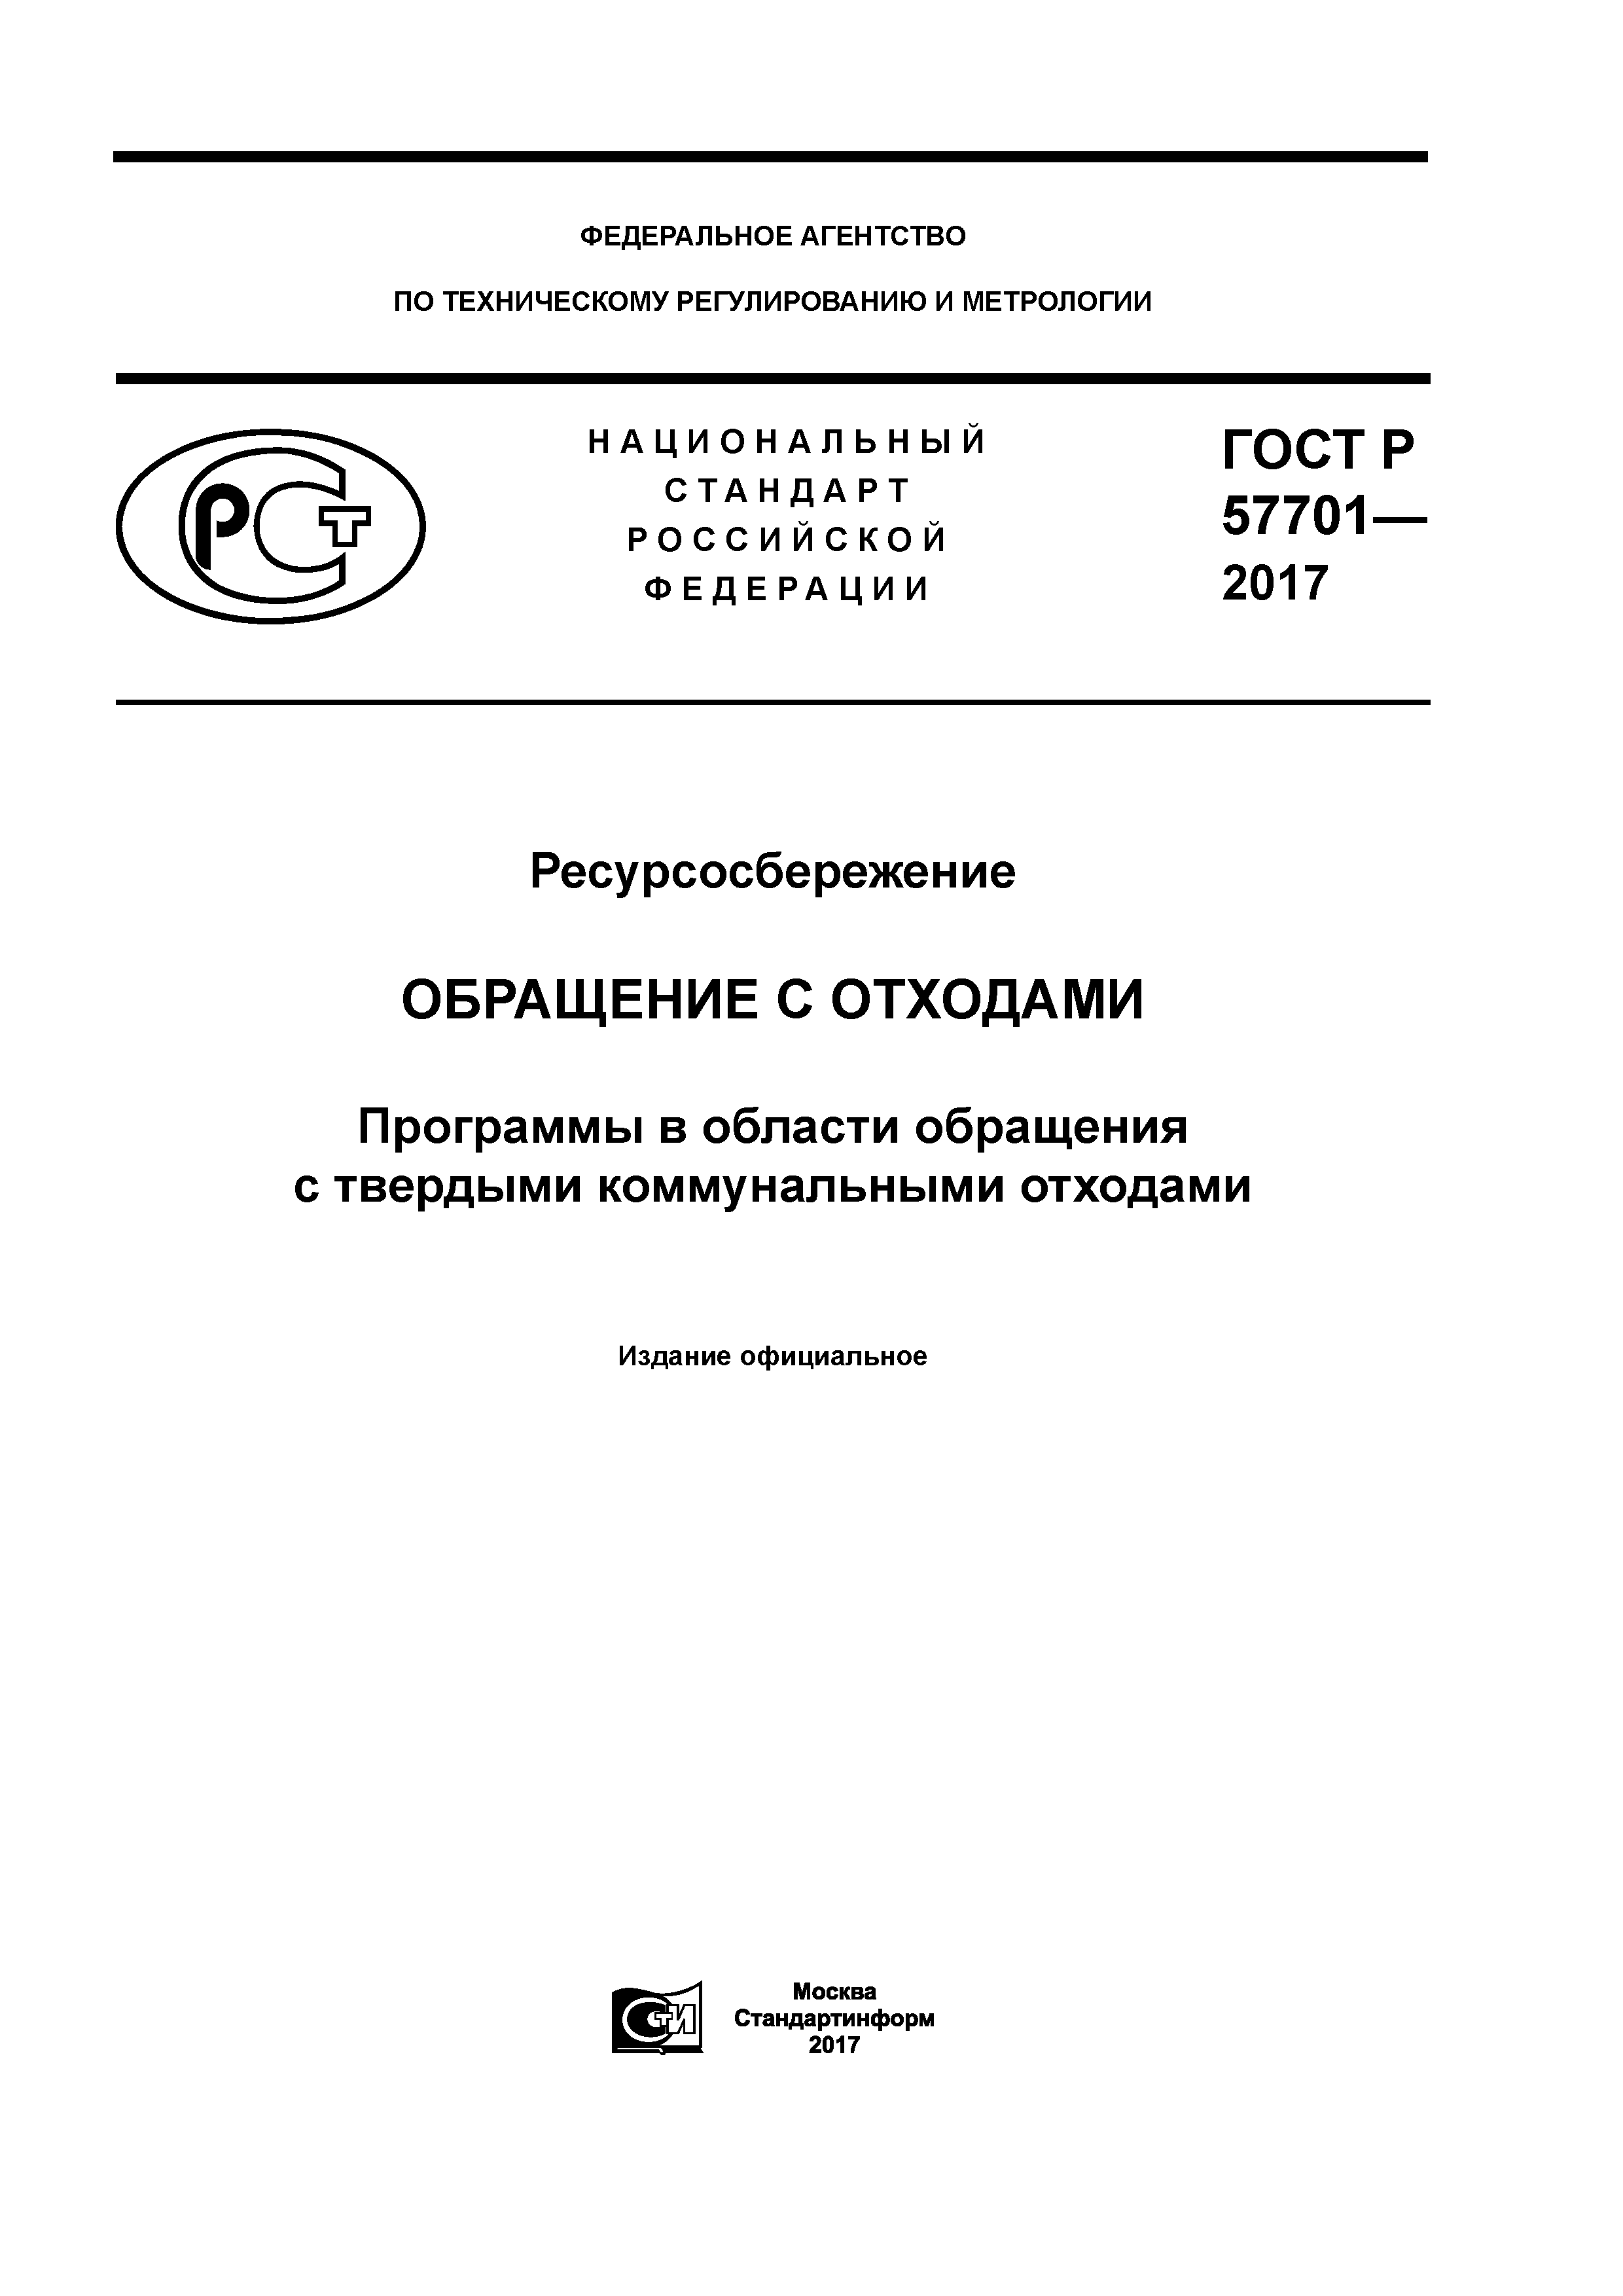 ГОСТ Р 57701-2017